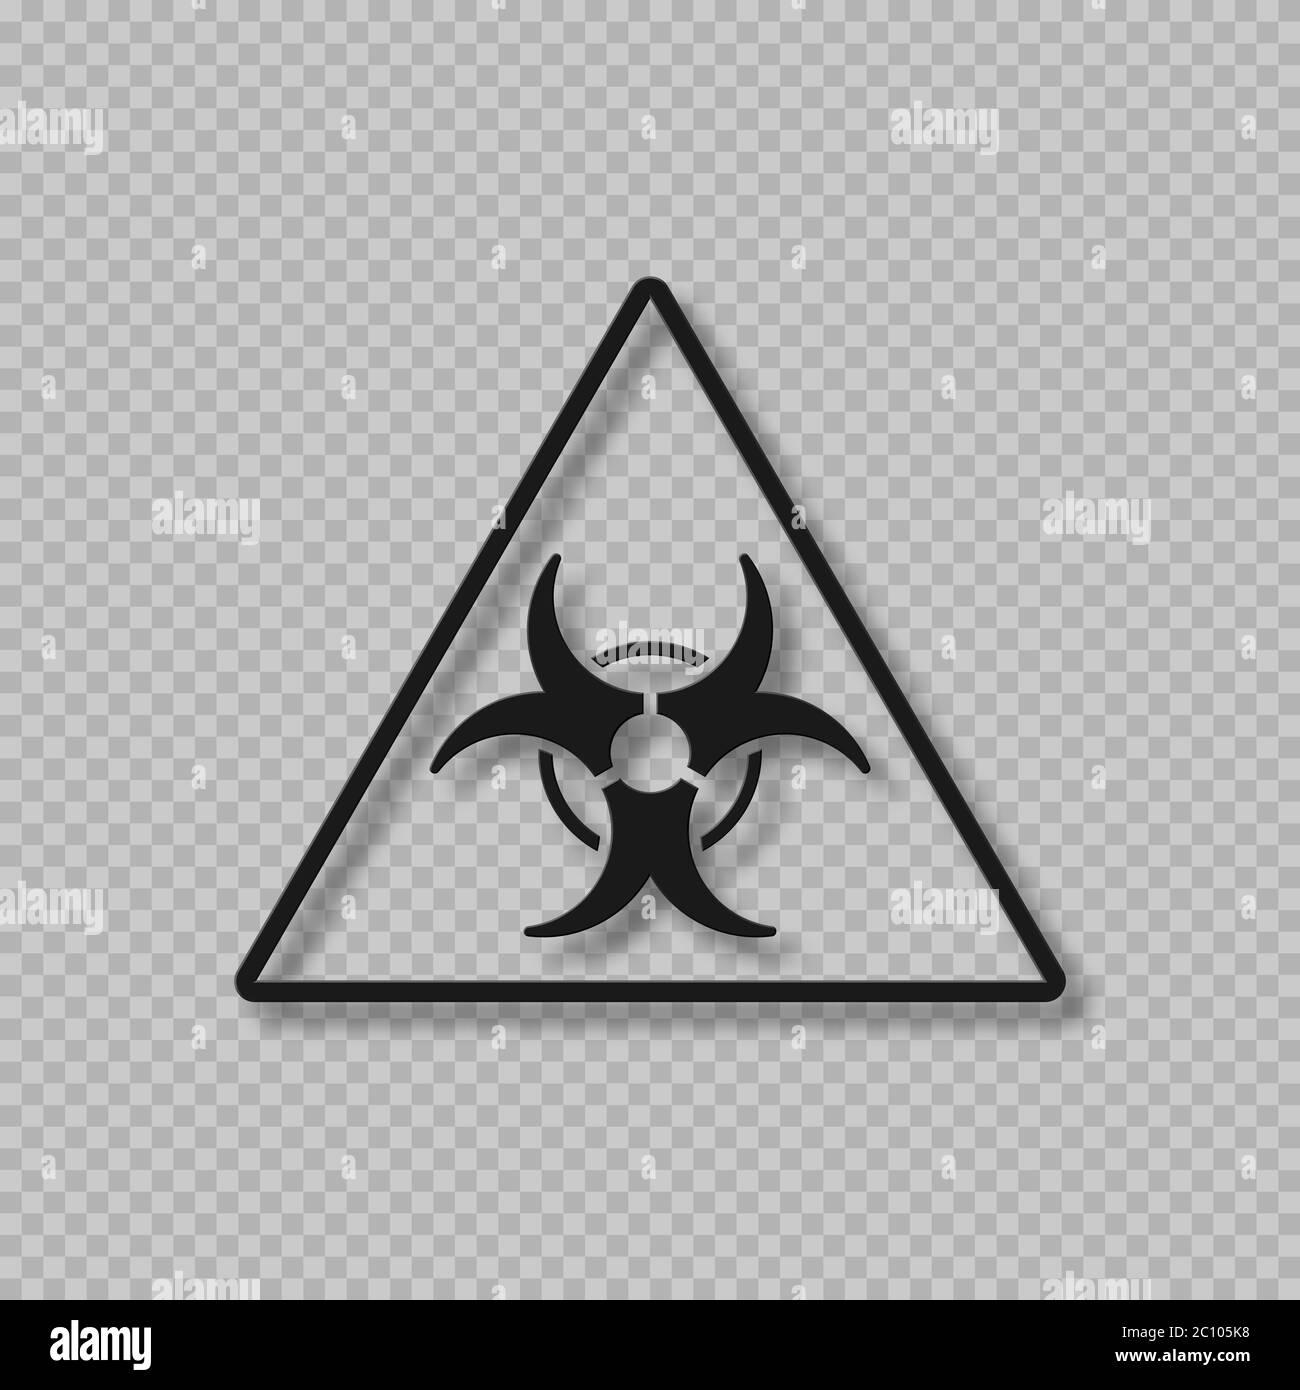 Vector biohazard warning symbol. Stock Vector